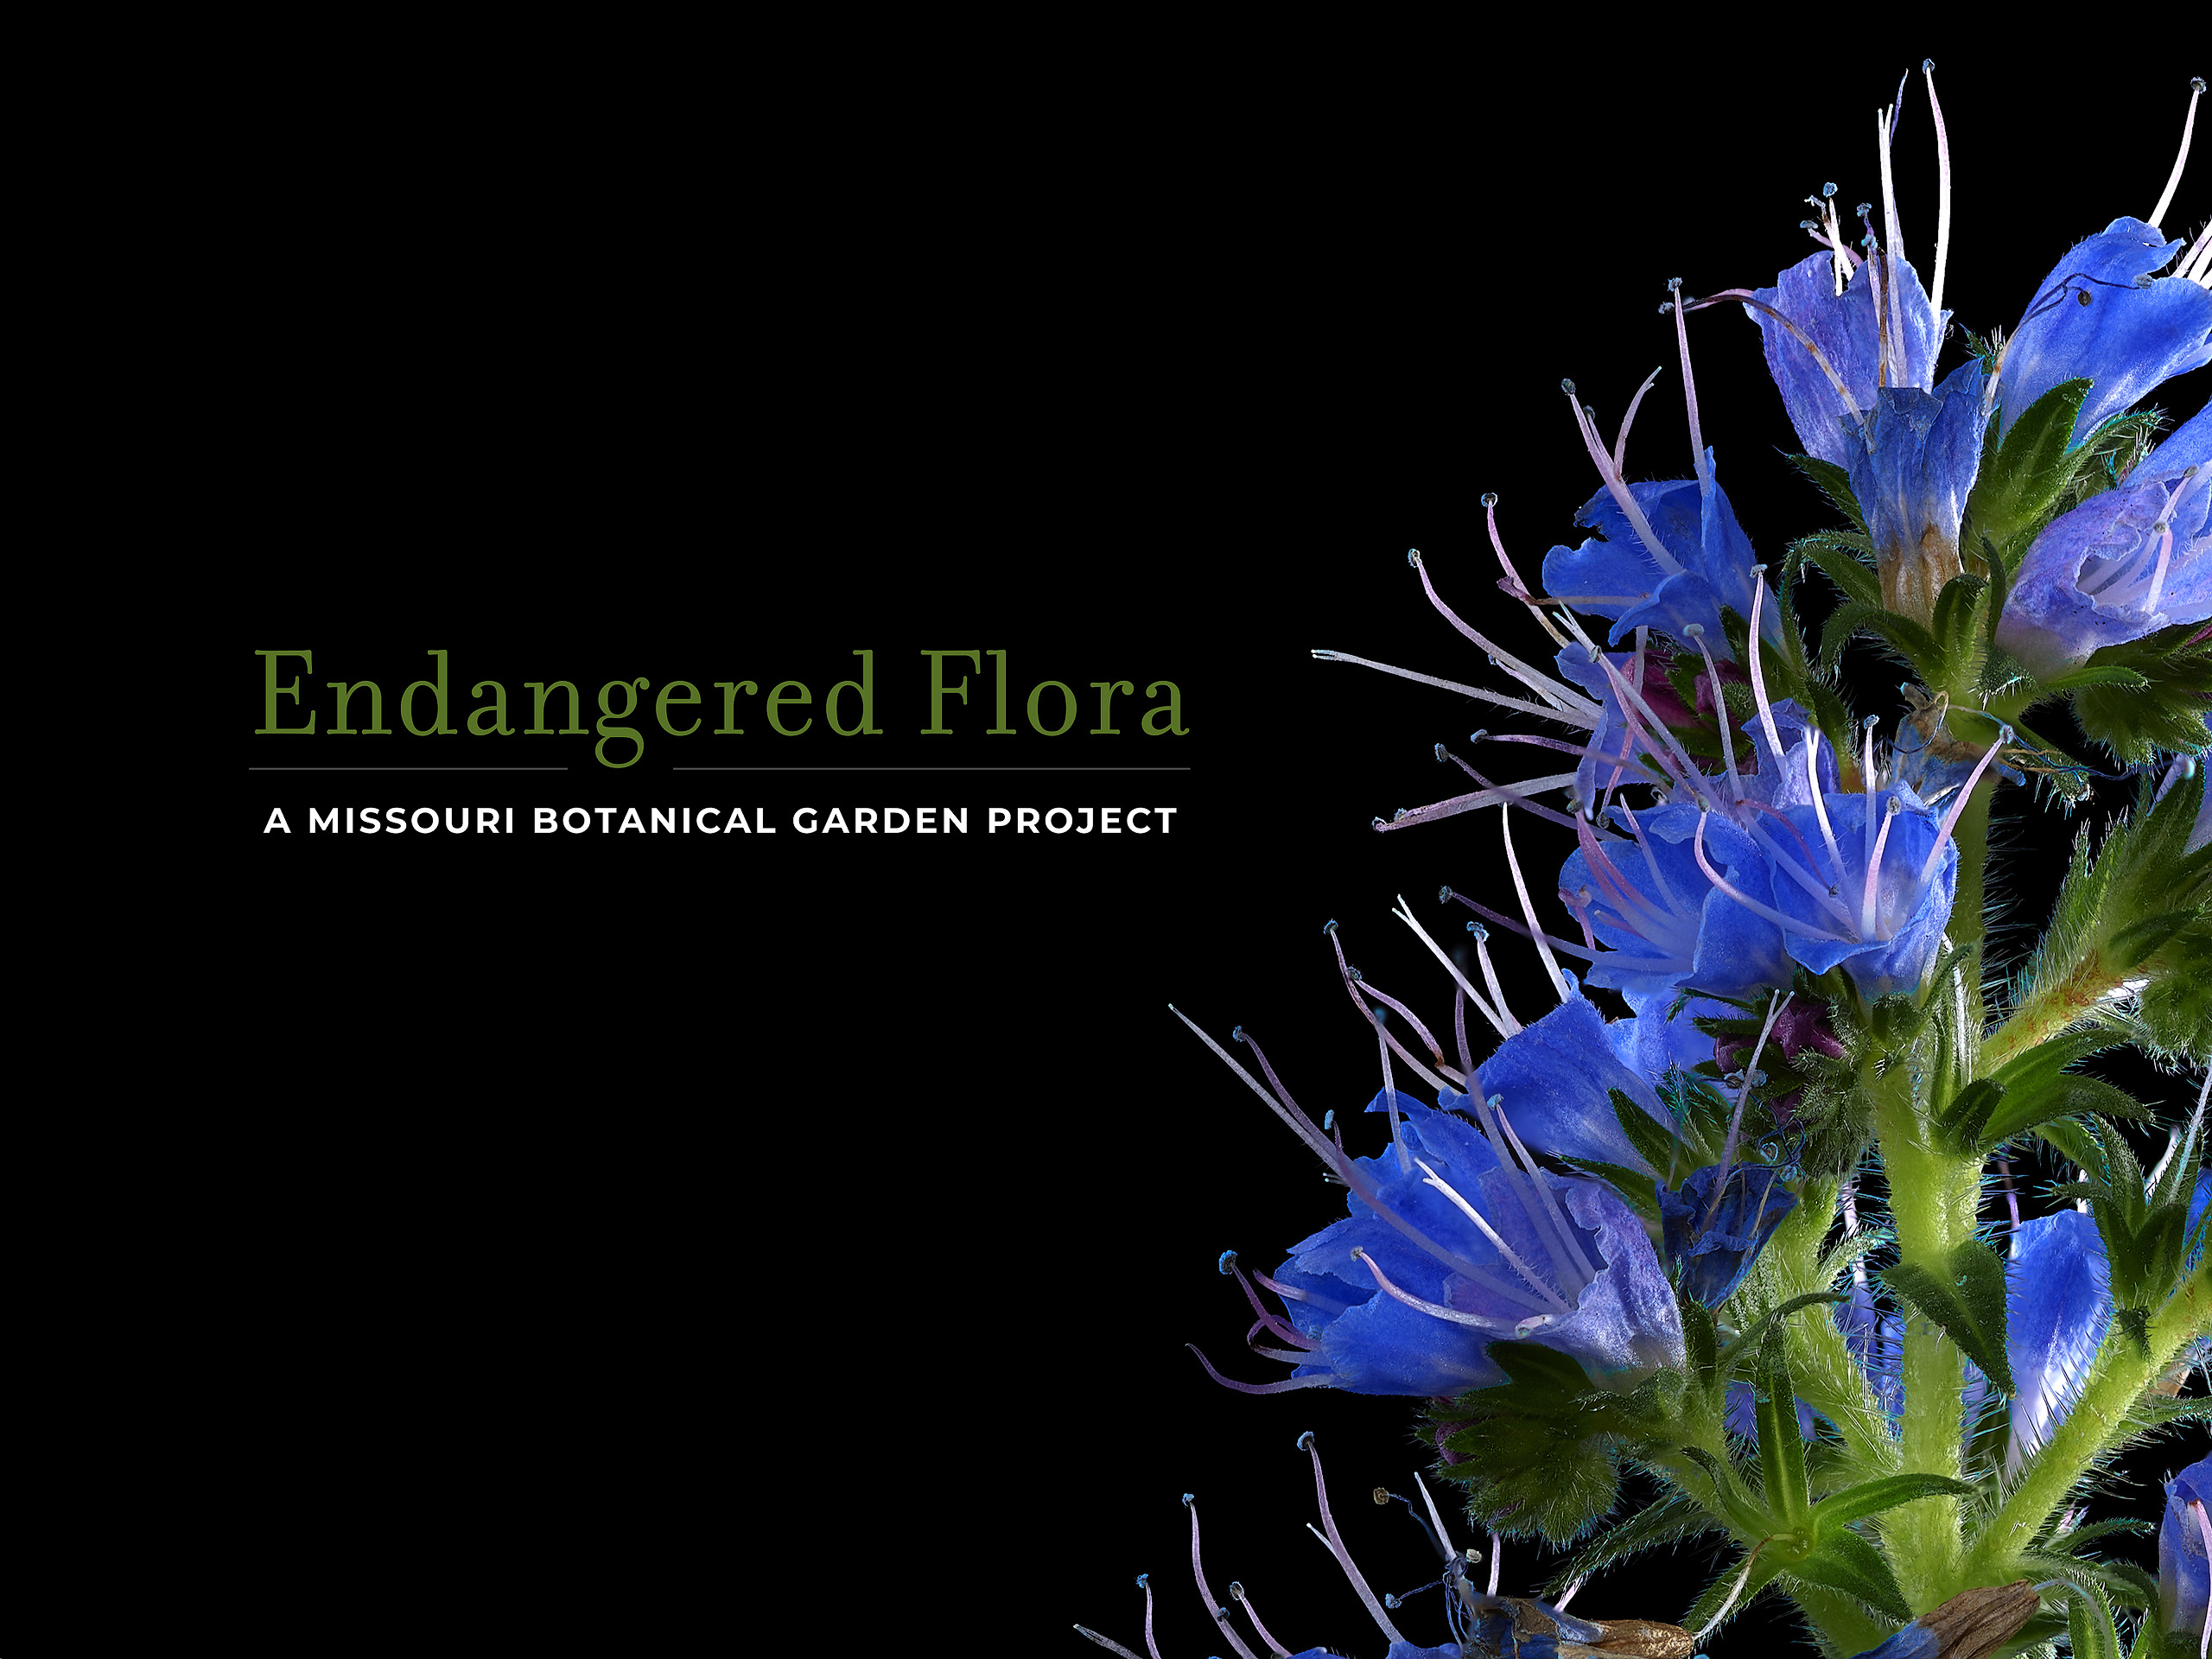 EndangeredFloraProjectStatement